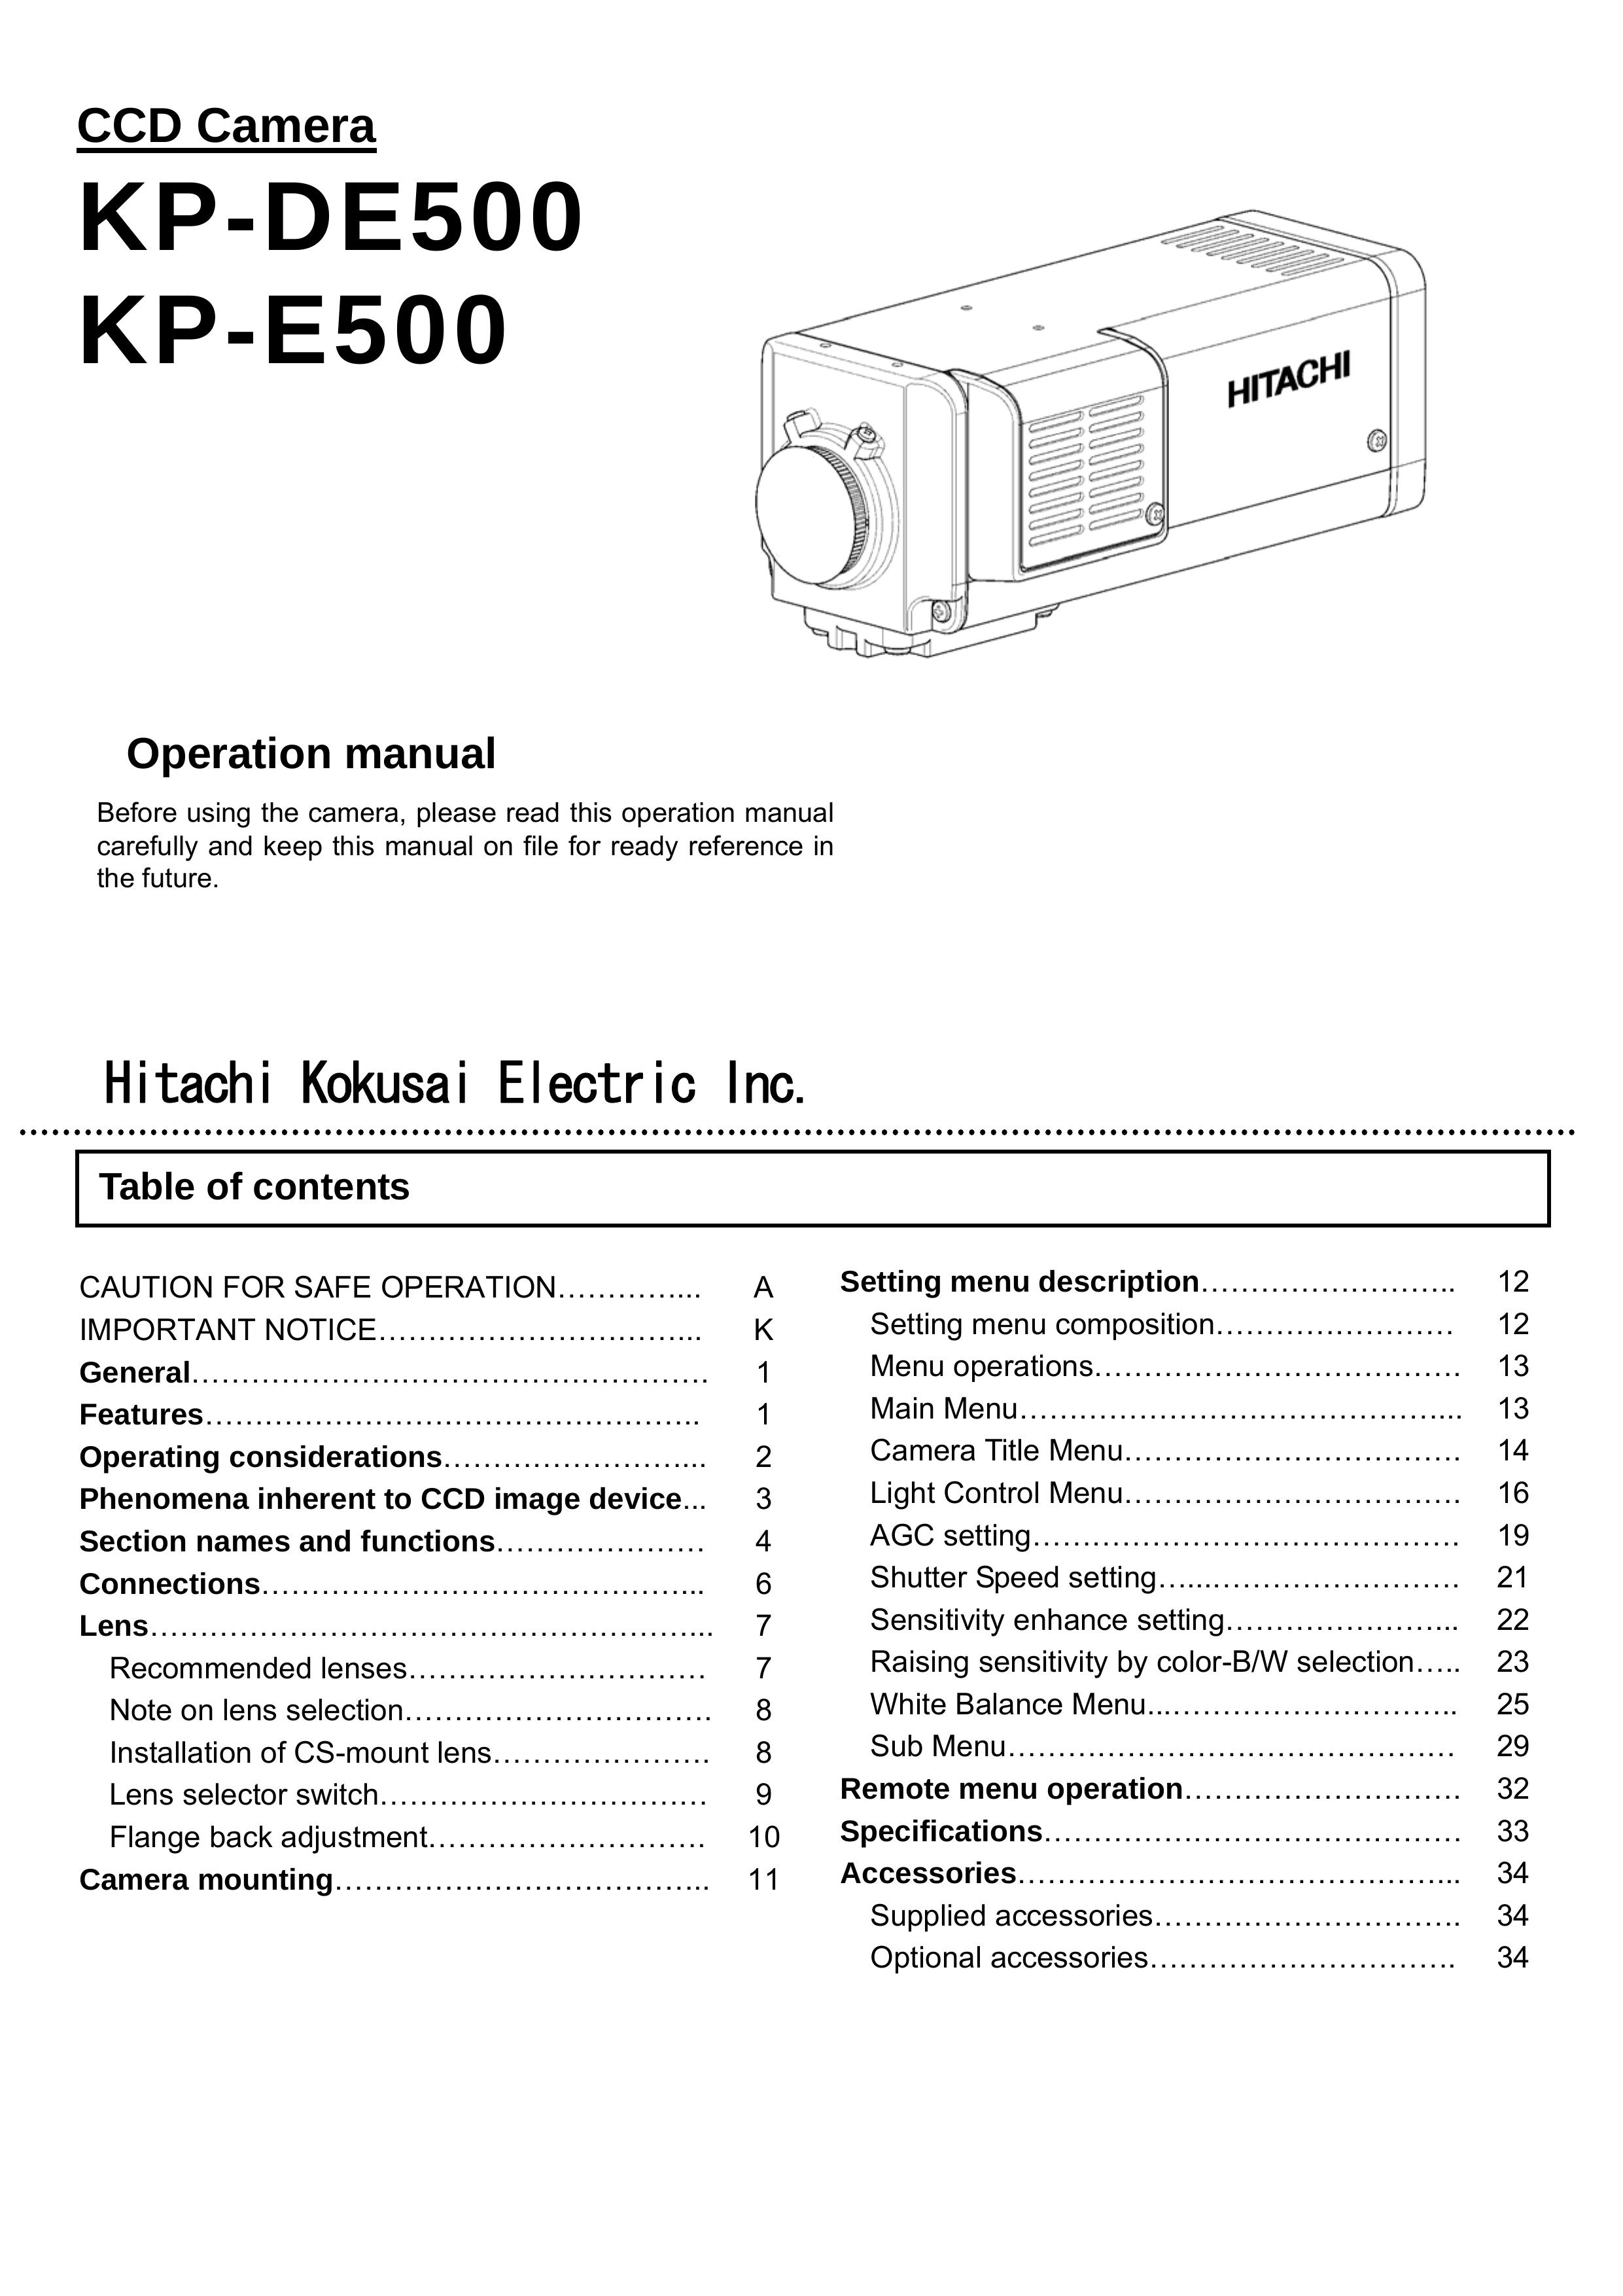 Hitachi KP-E500 Security Camera User Manual